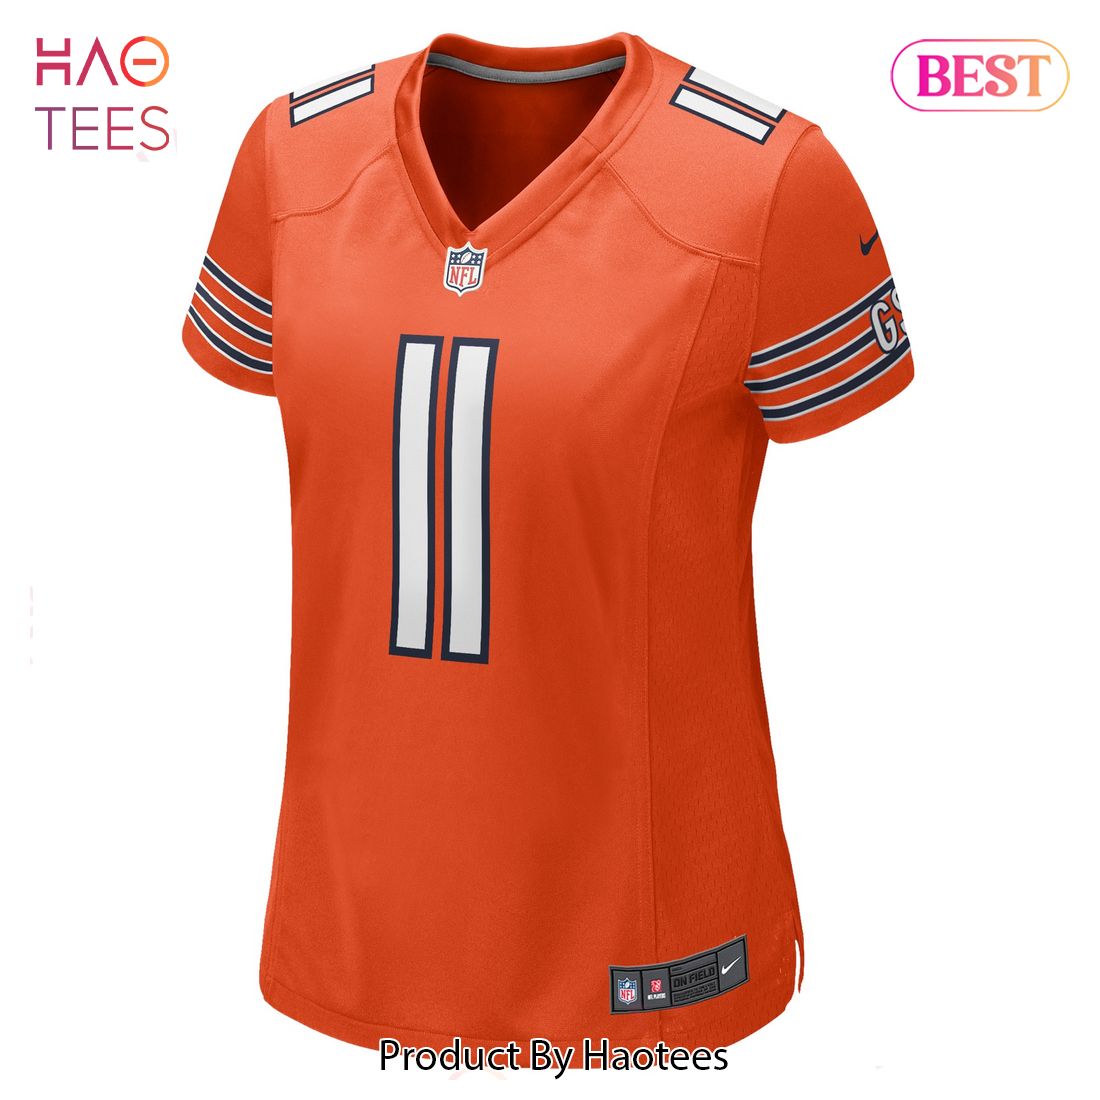 Darnell Mooney Chicago Bears Nike Women's Alternate Game Player Jersey Orange